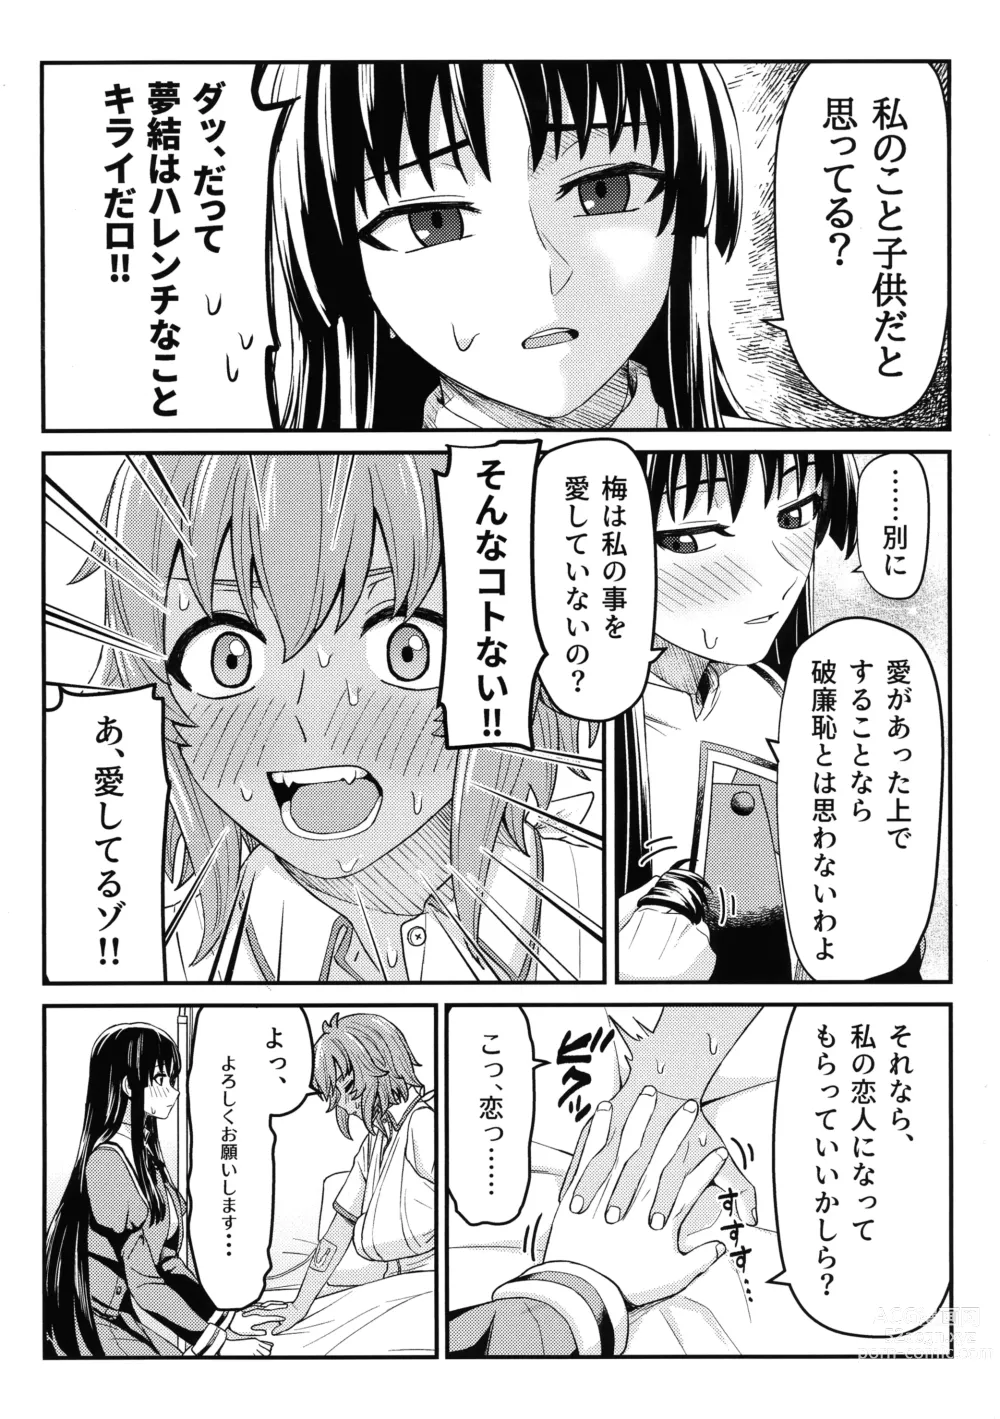 Page 9 of doujinshi Corsage